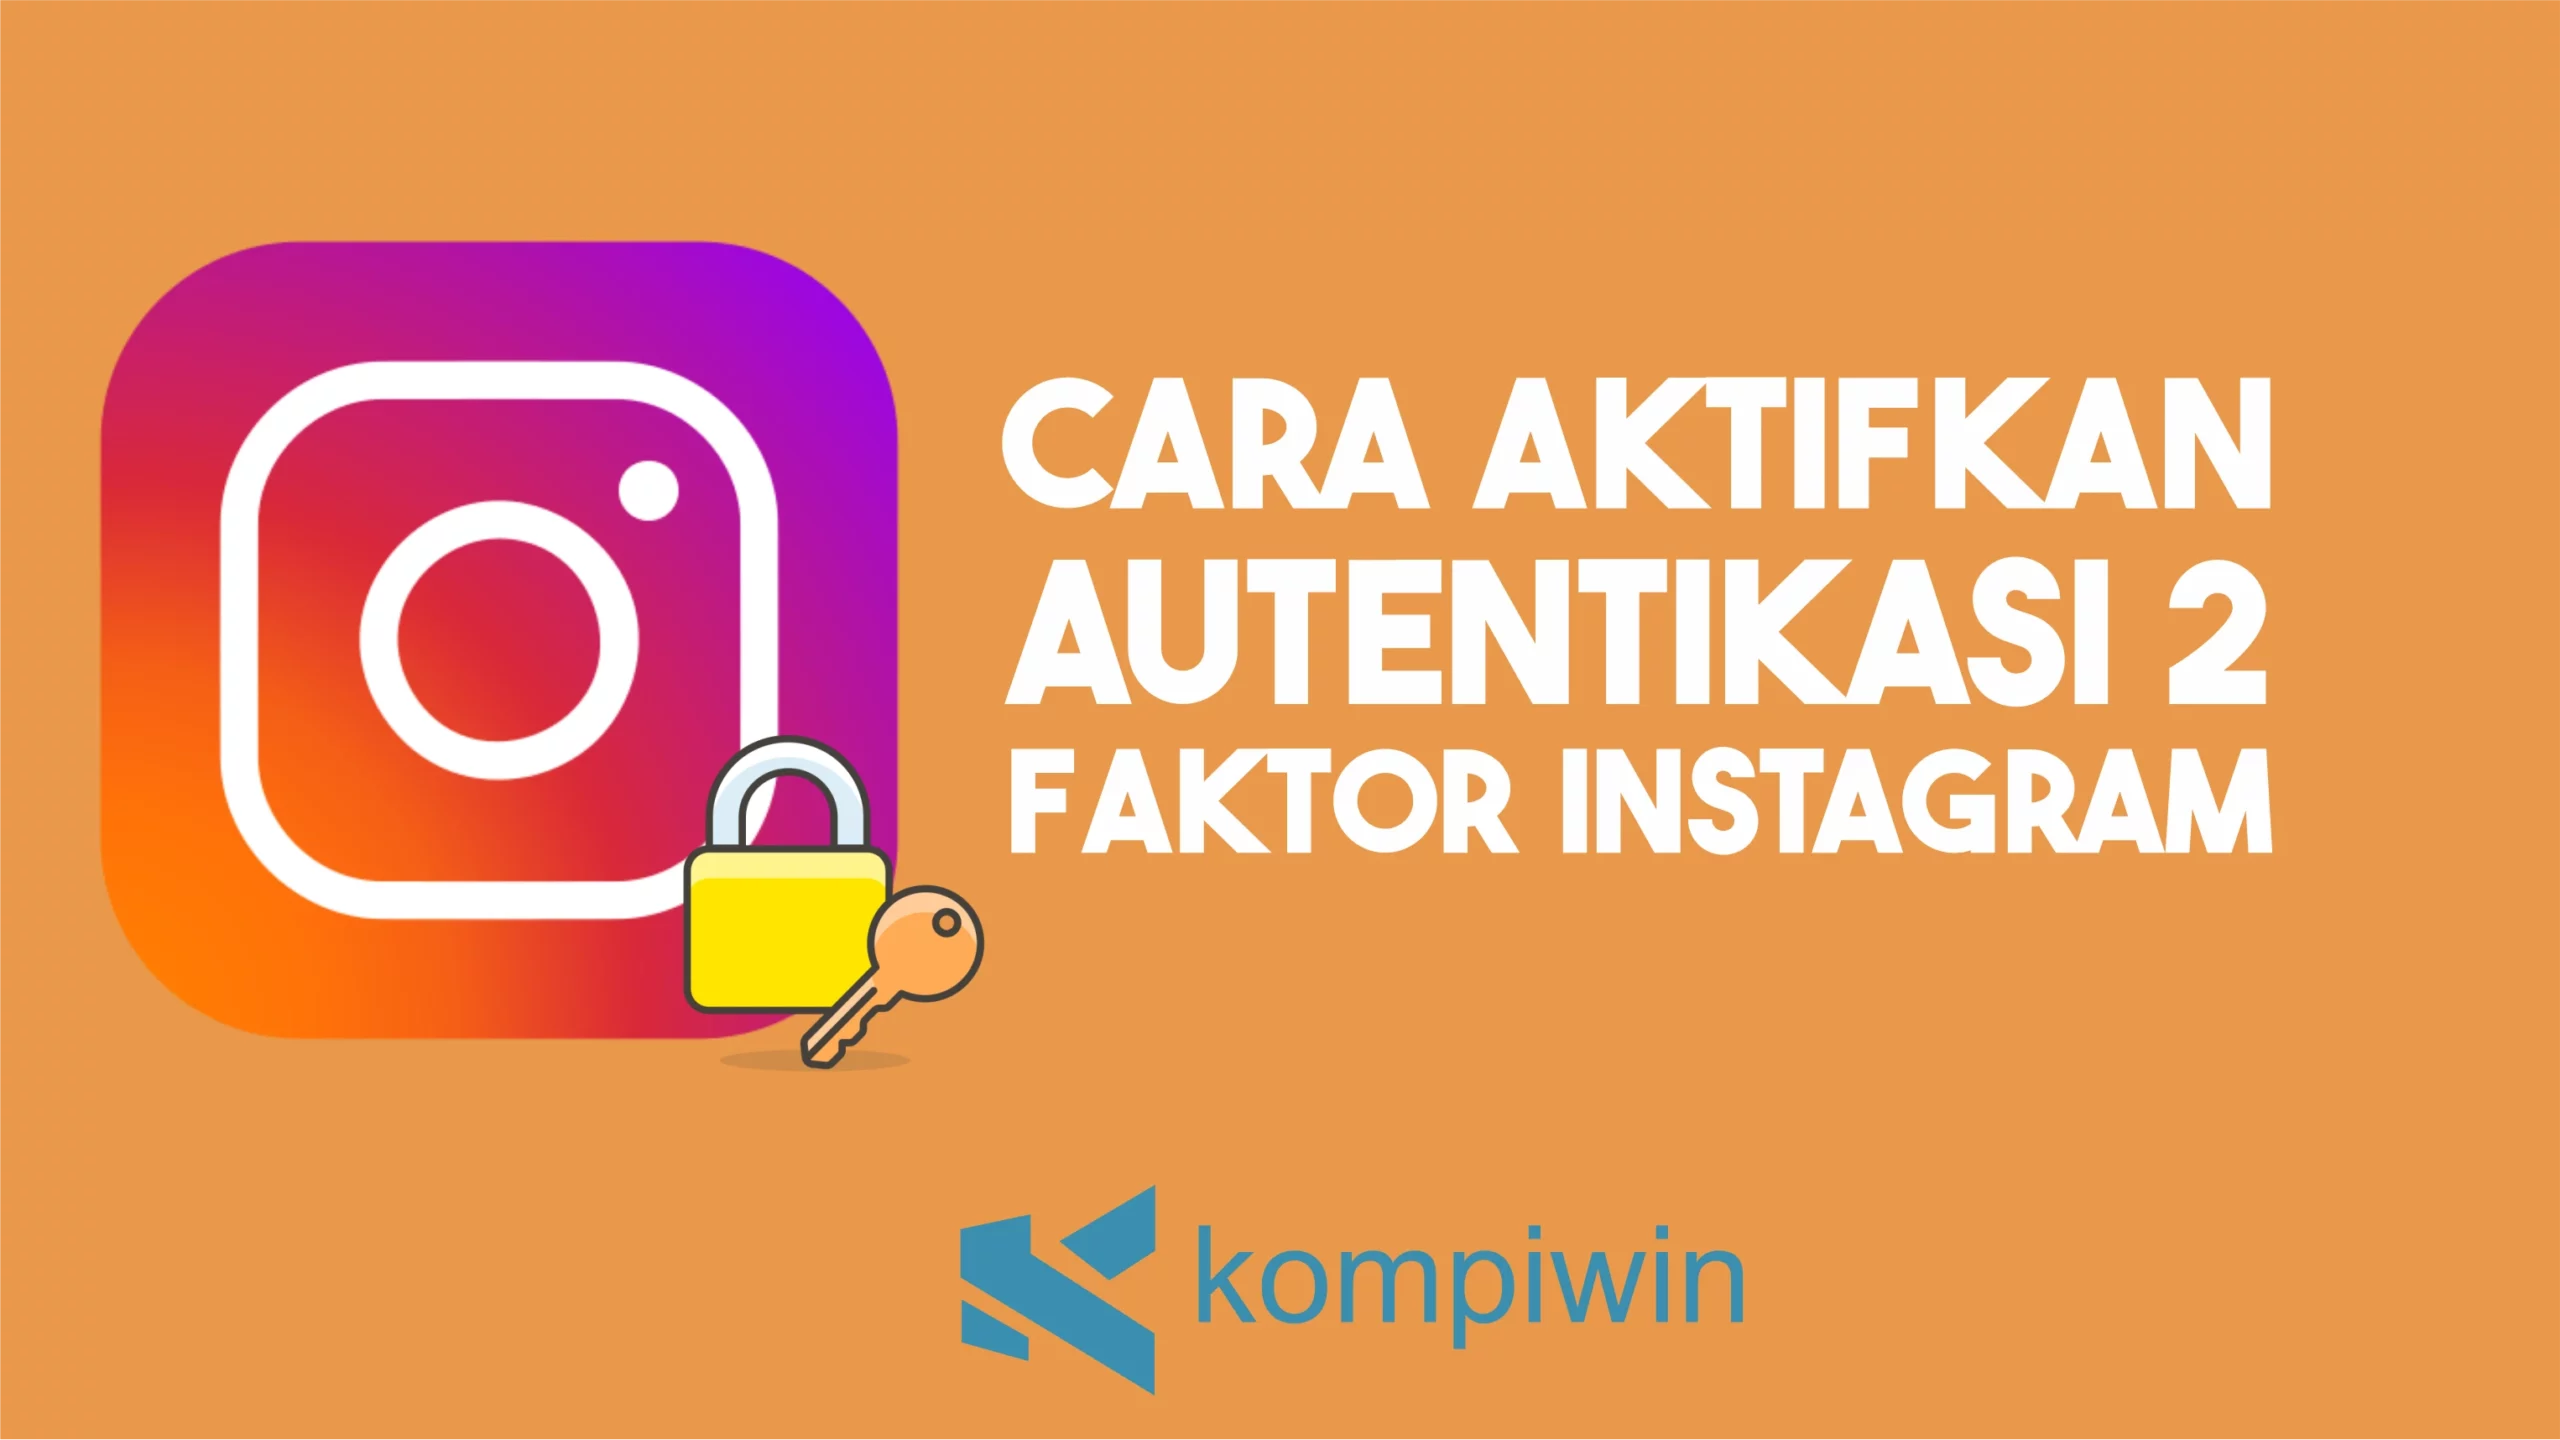 Cara Aktifkan Autentikasi 2 Faktor Instagram